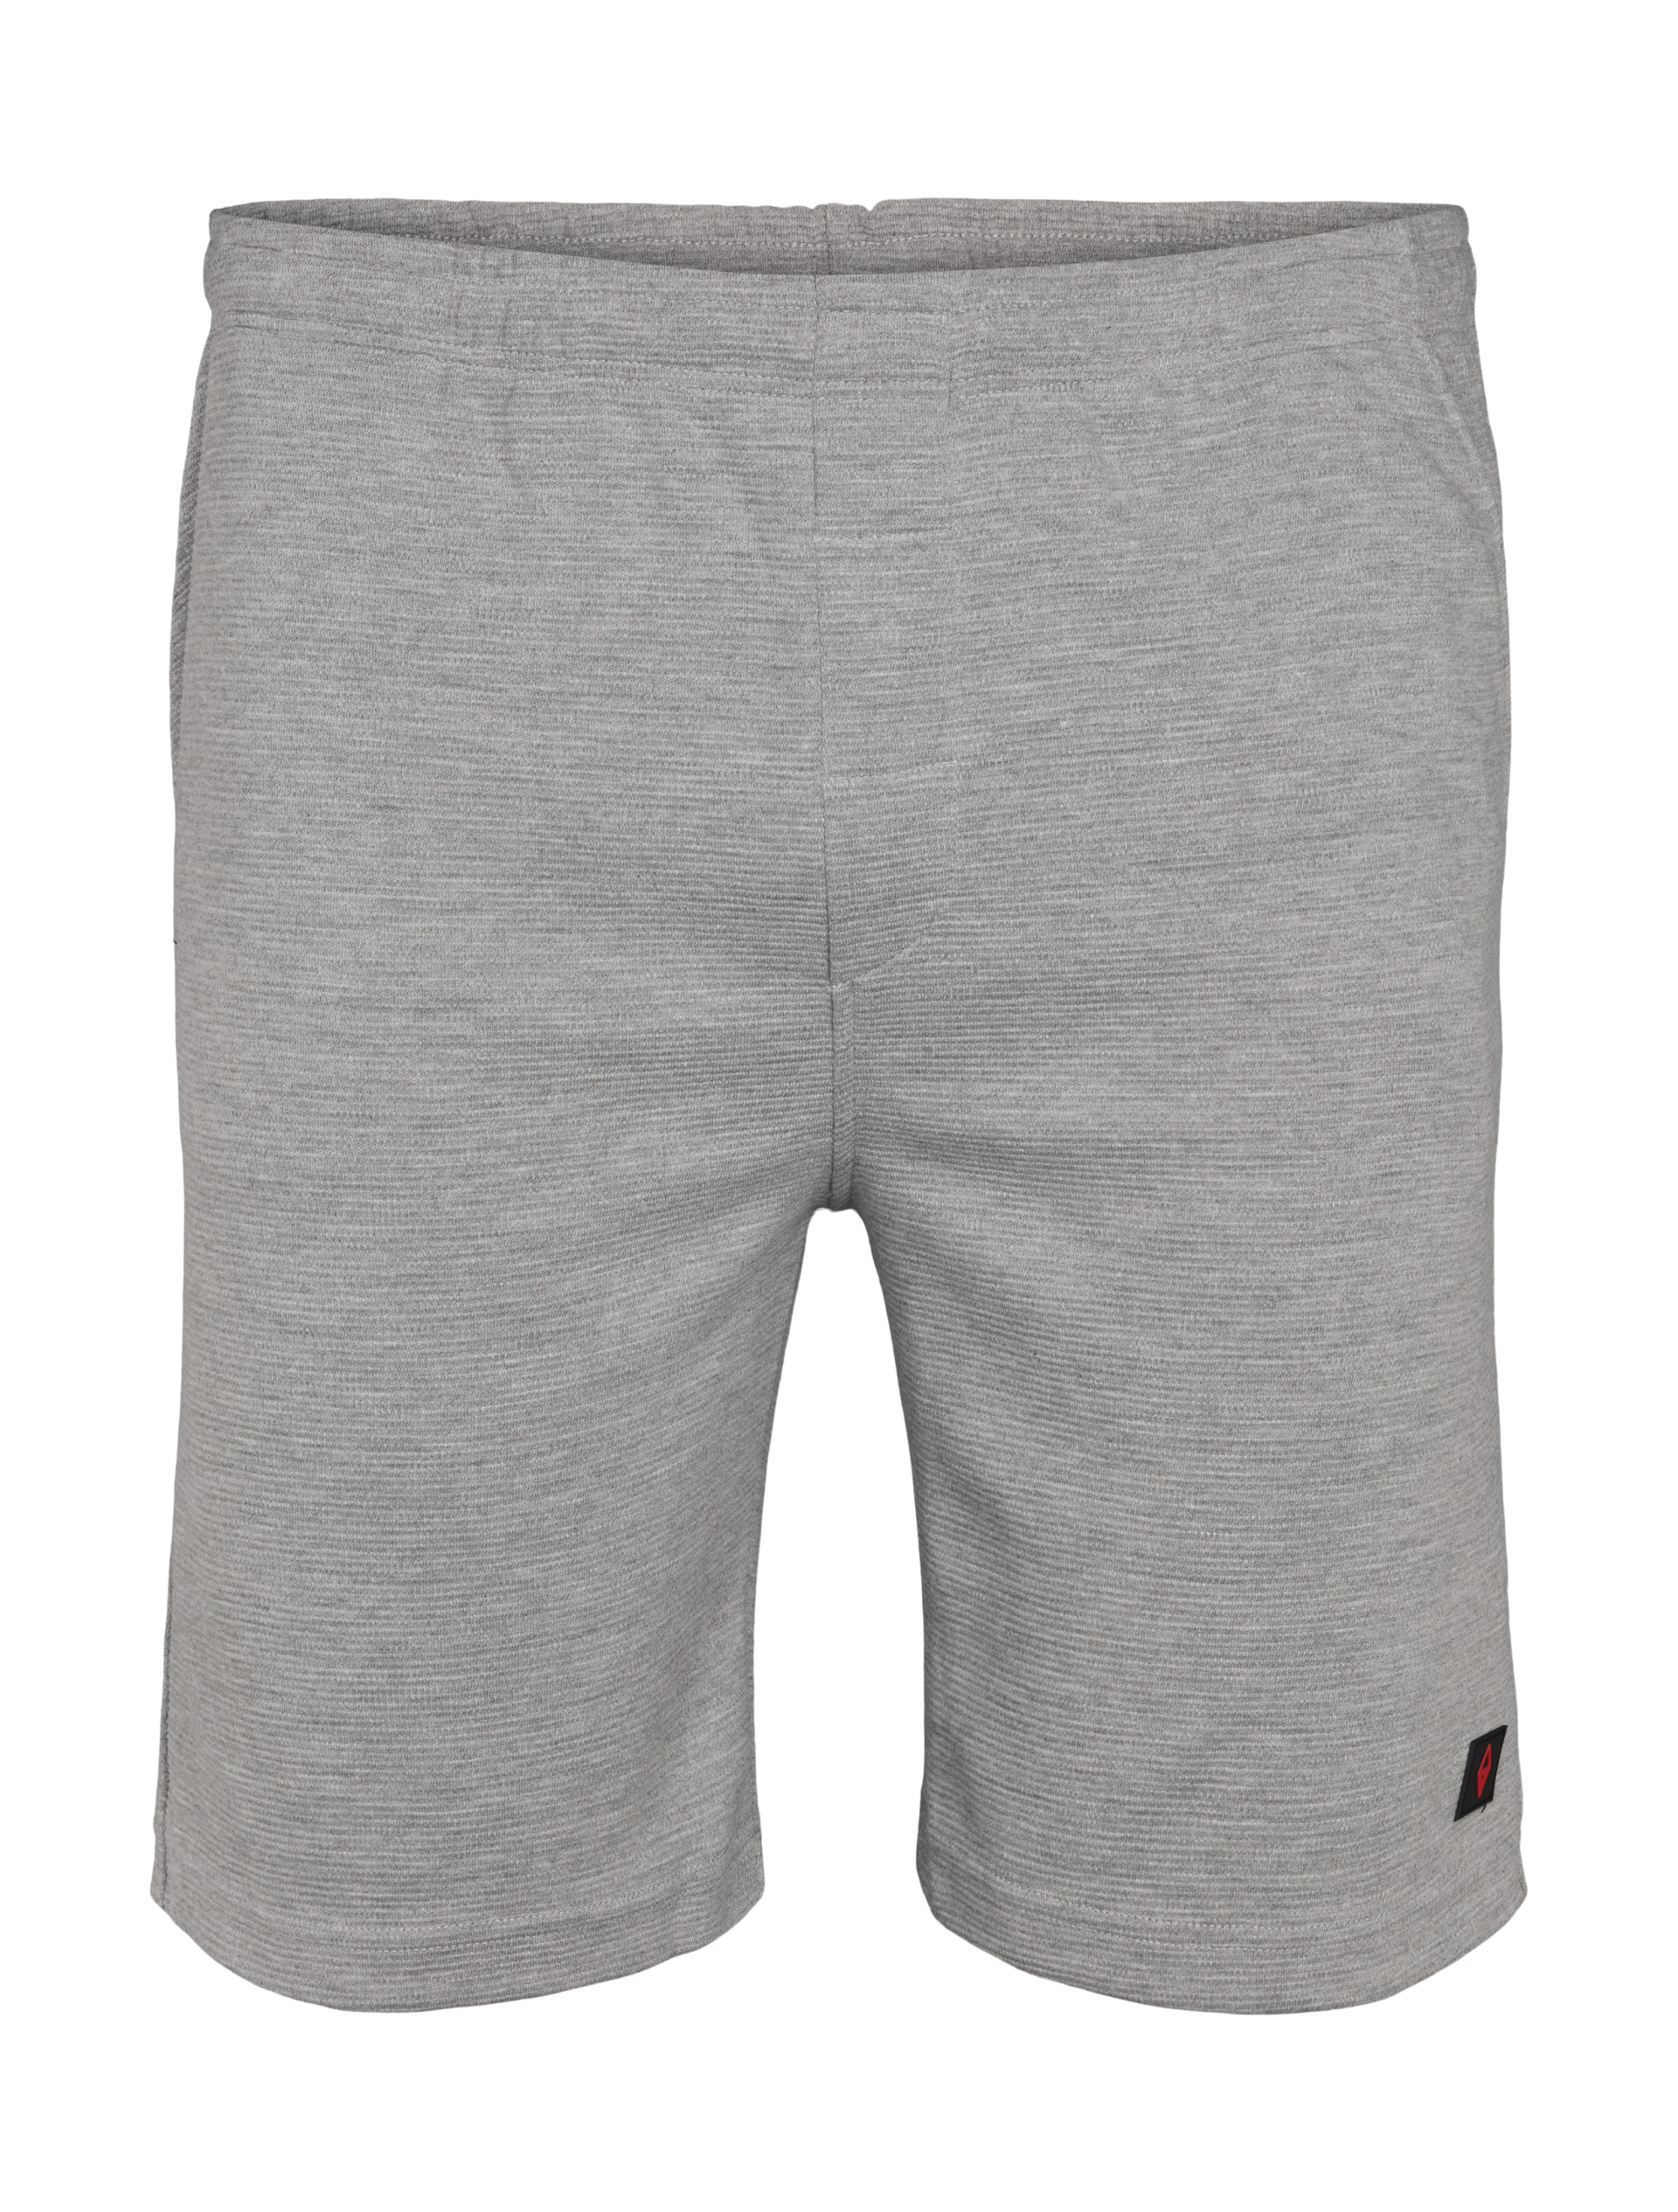 North Casual shorts grå / 040 grey